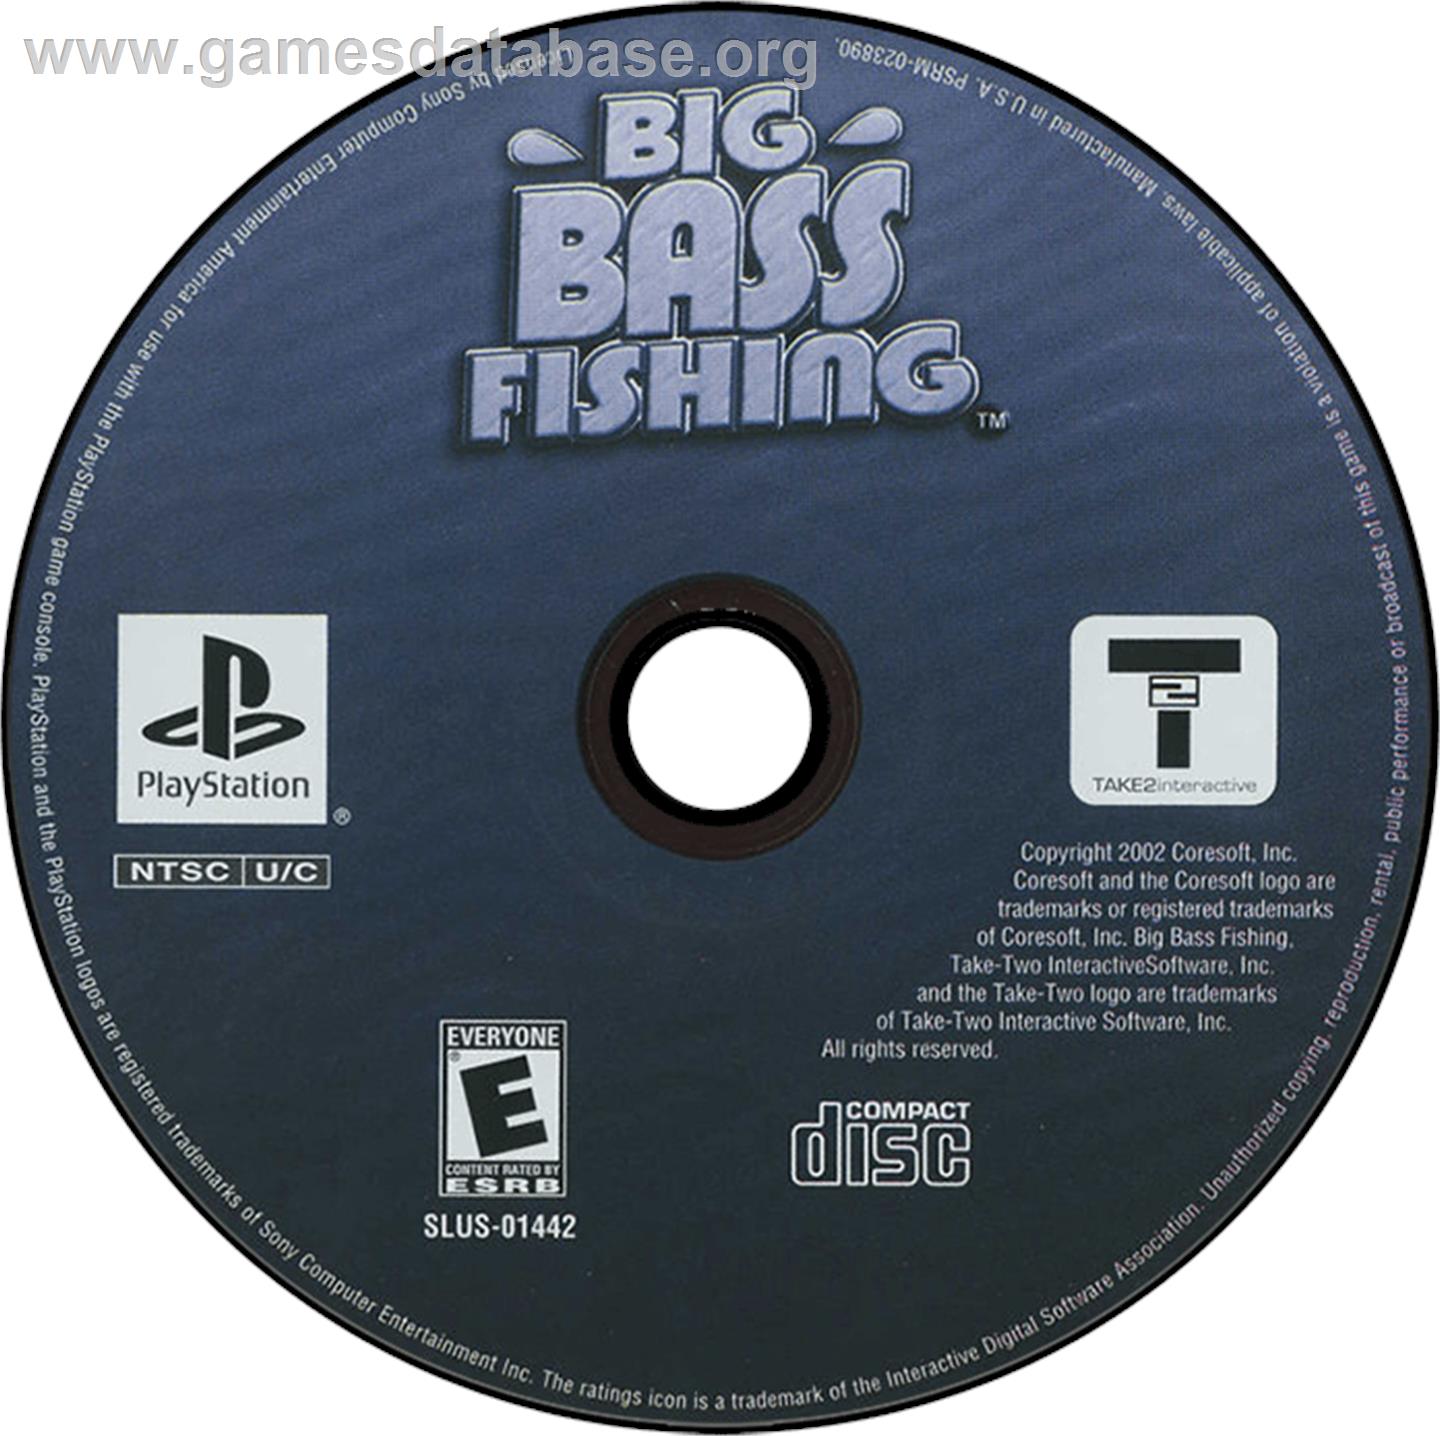 Big Bass Fishing - Sony Playstation - Artwork - Disc